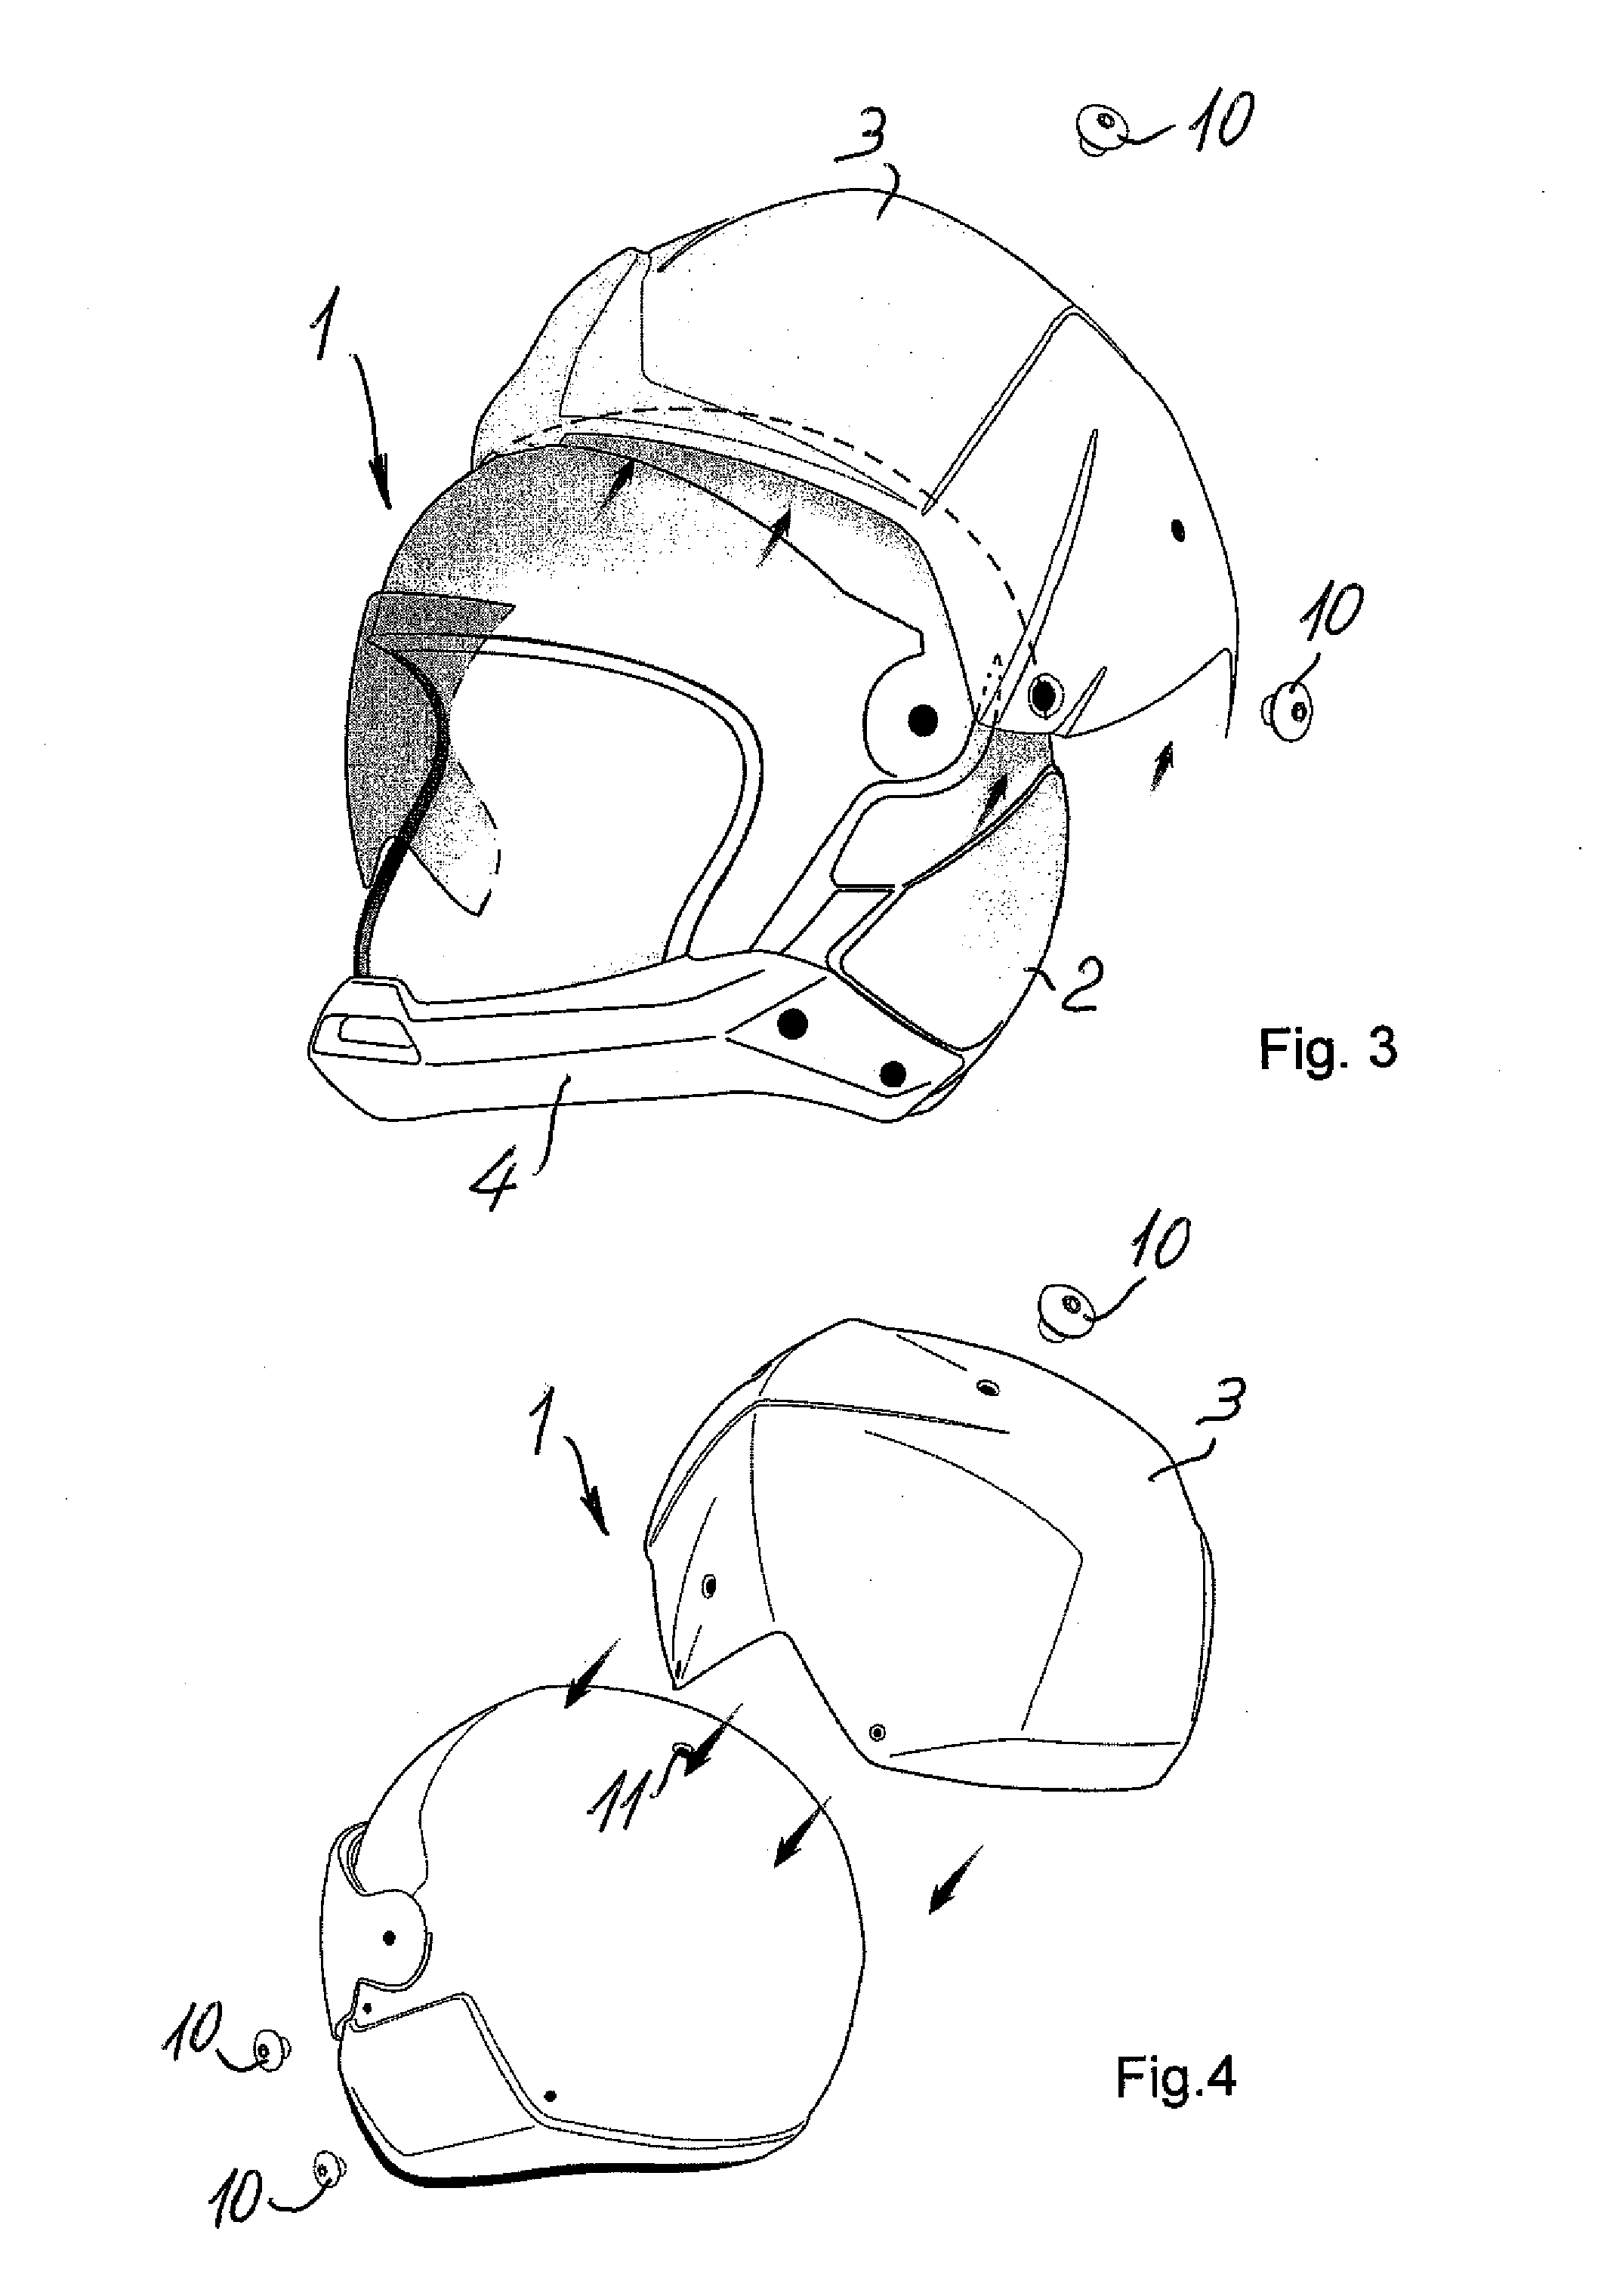 Modular protection helmet